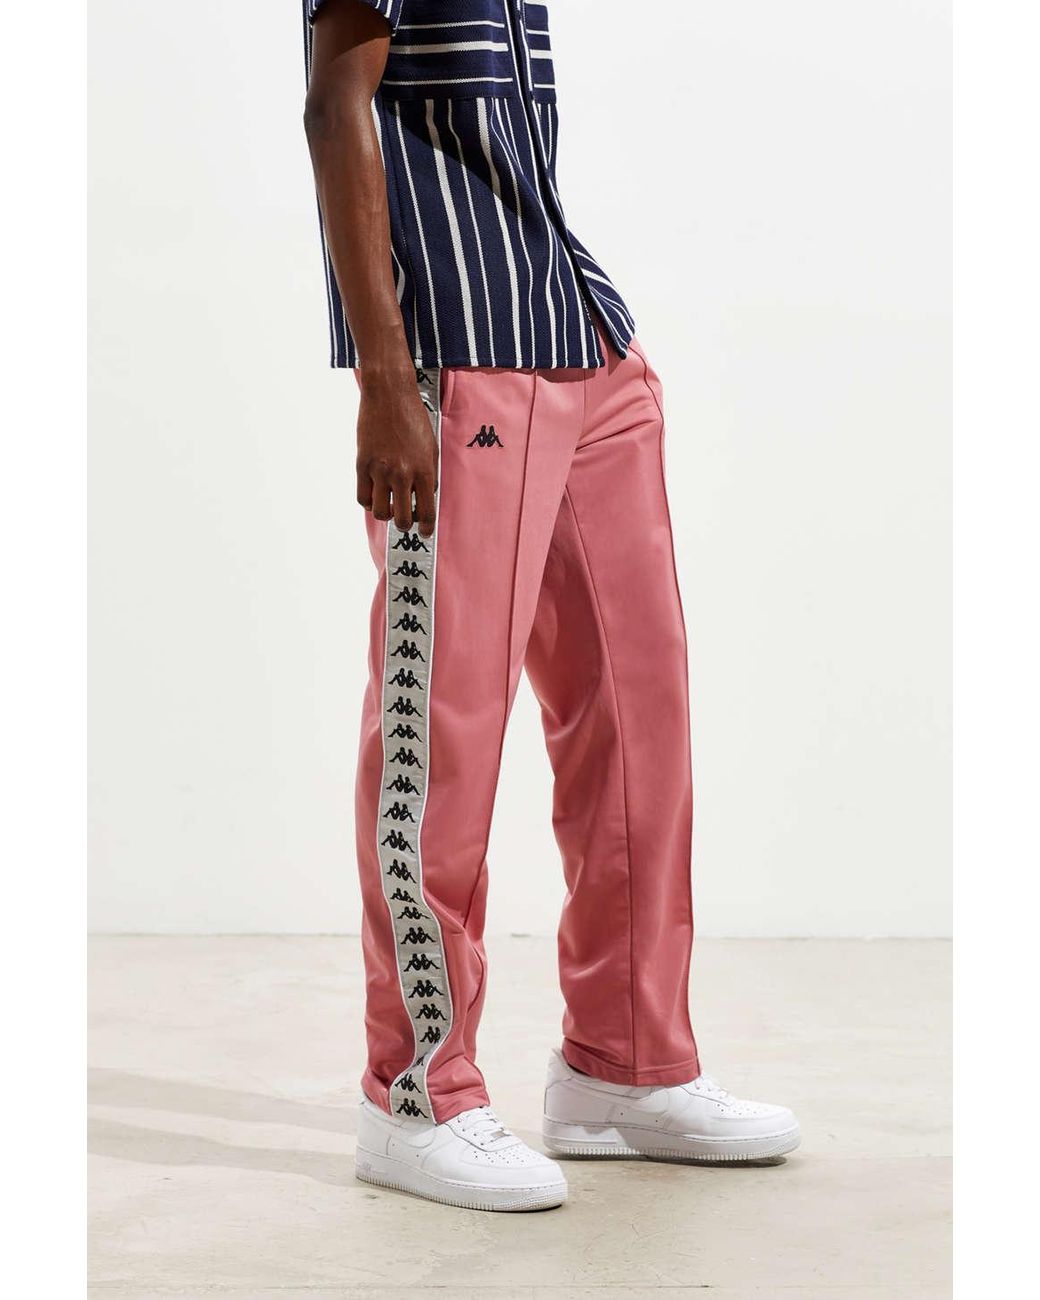 Kappa Track Pants Striped Polyester Size M Rare Logo Upside Down | eBay-cheohanoi.vn